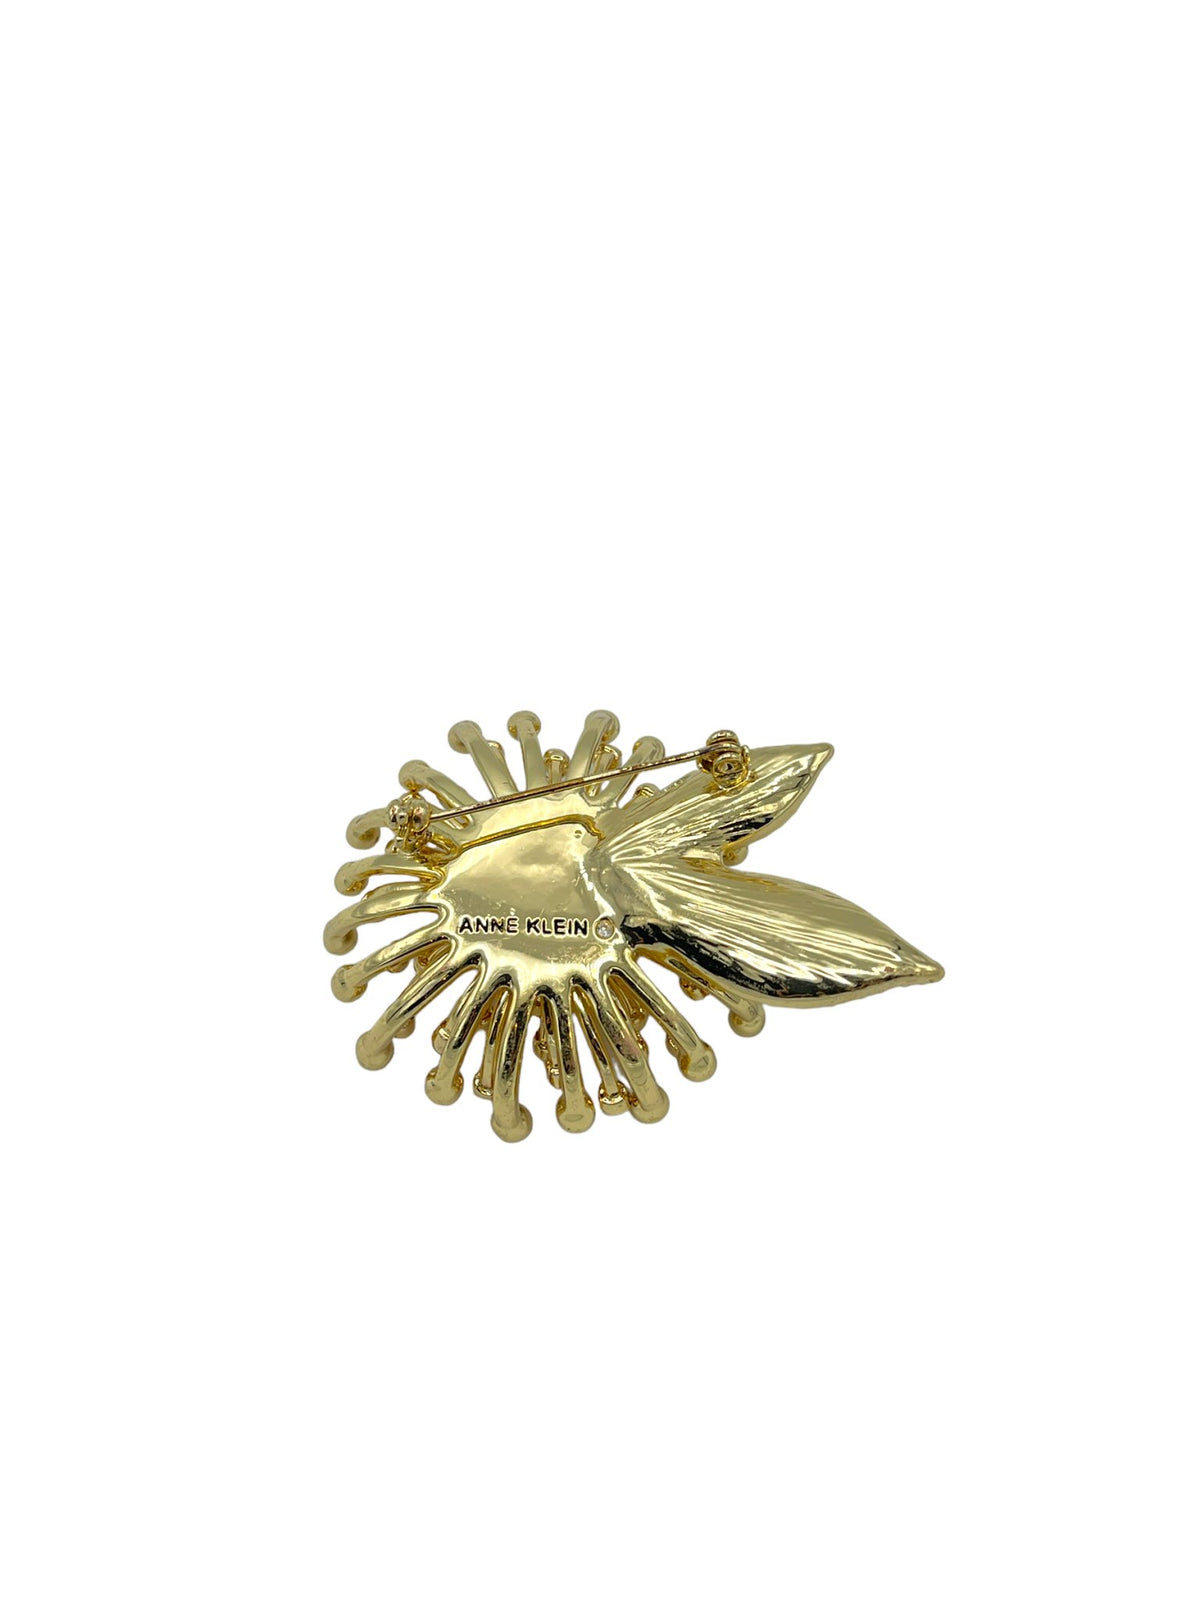 Anne Klein Gold Three Dimensional Flower Brooch - 24 Wishes Vintage Jewelry